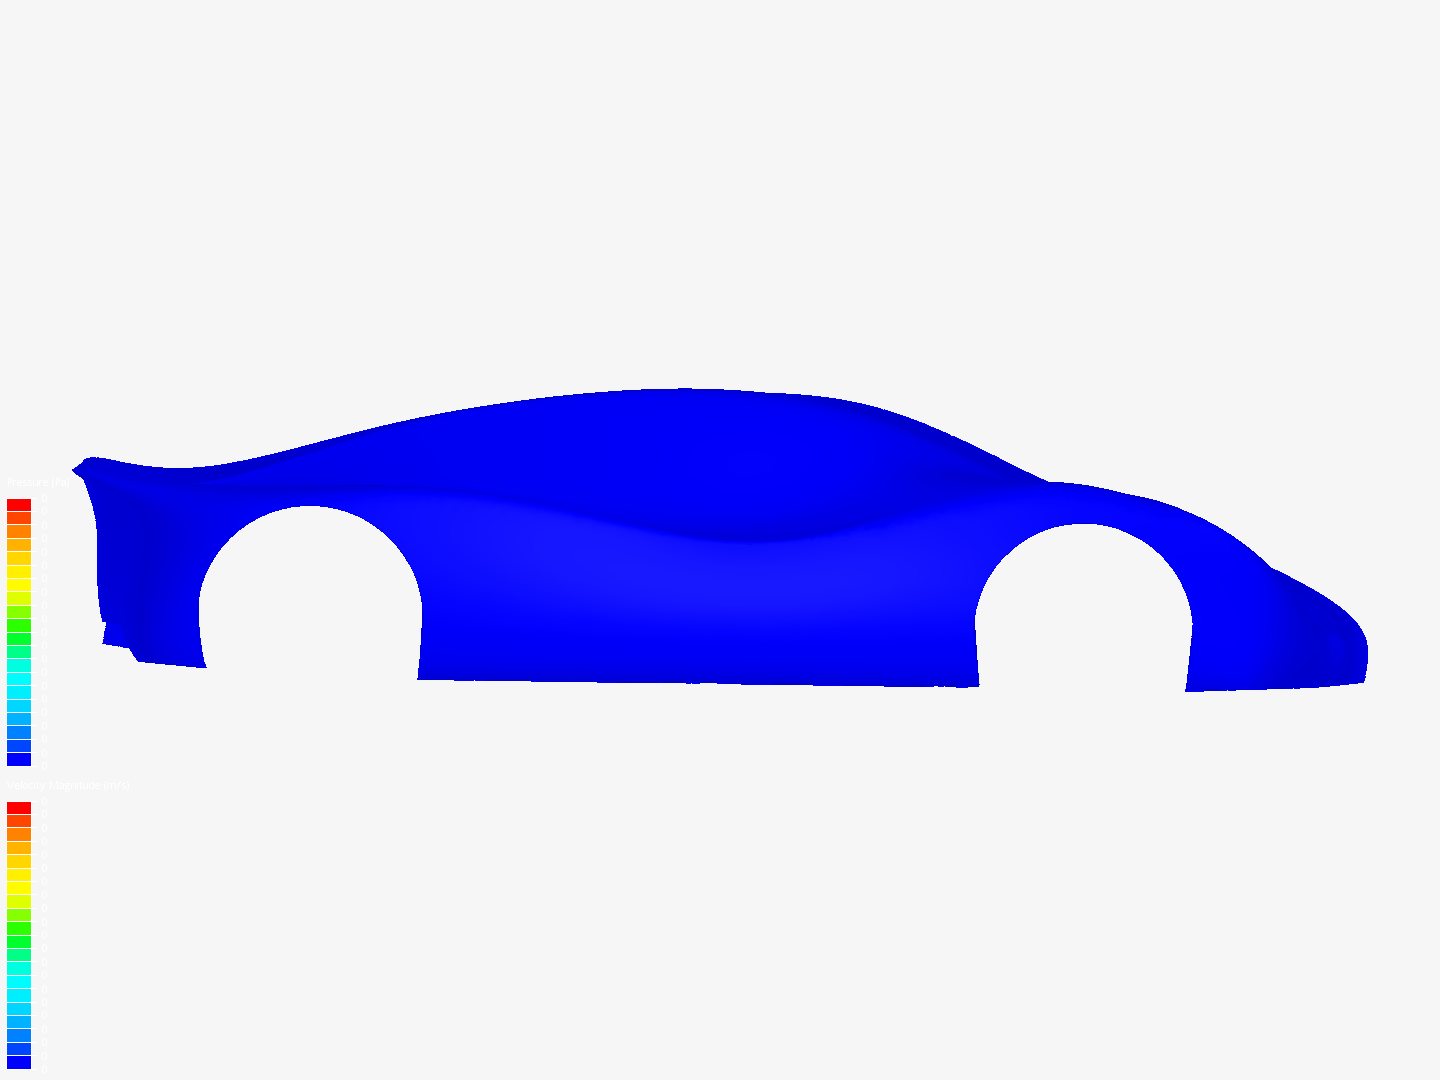 Car test image